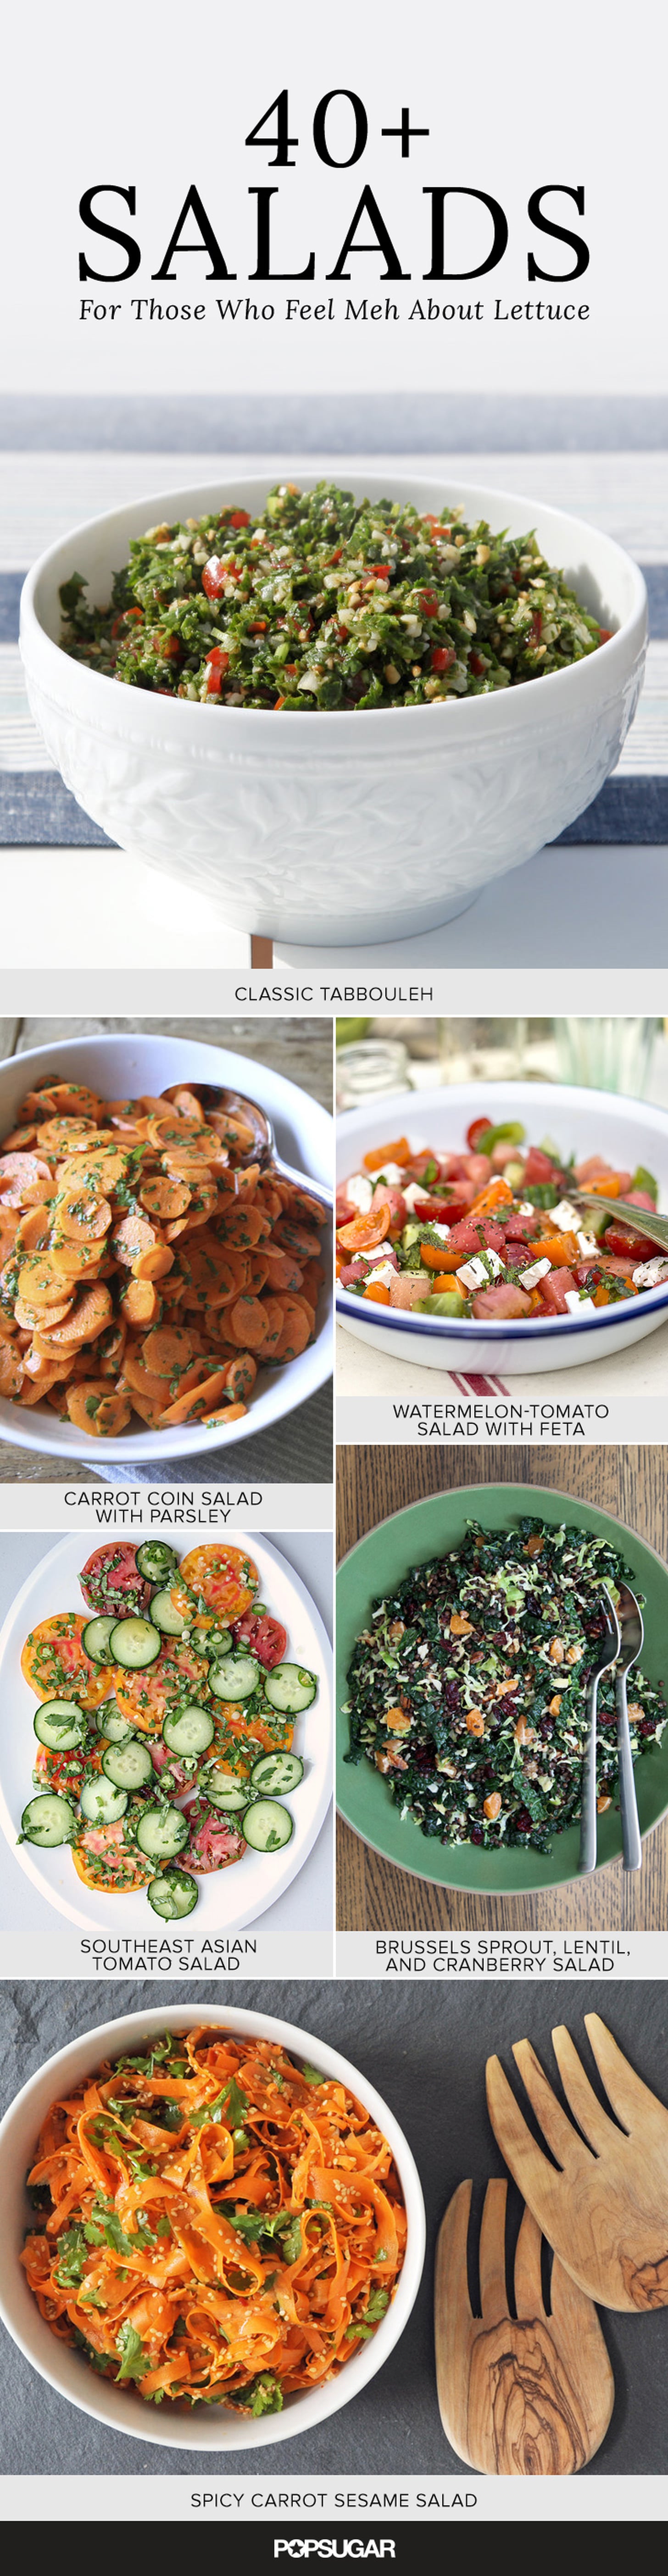 Salad Recipes That Don't Use Lettuce | POPSUGAR Food